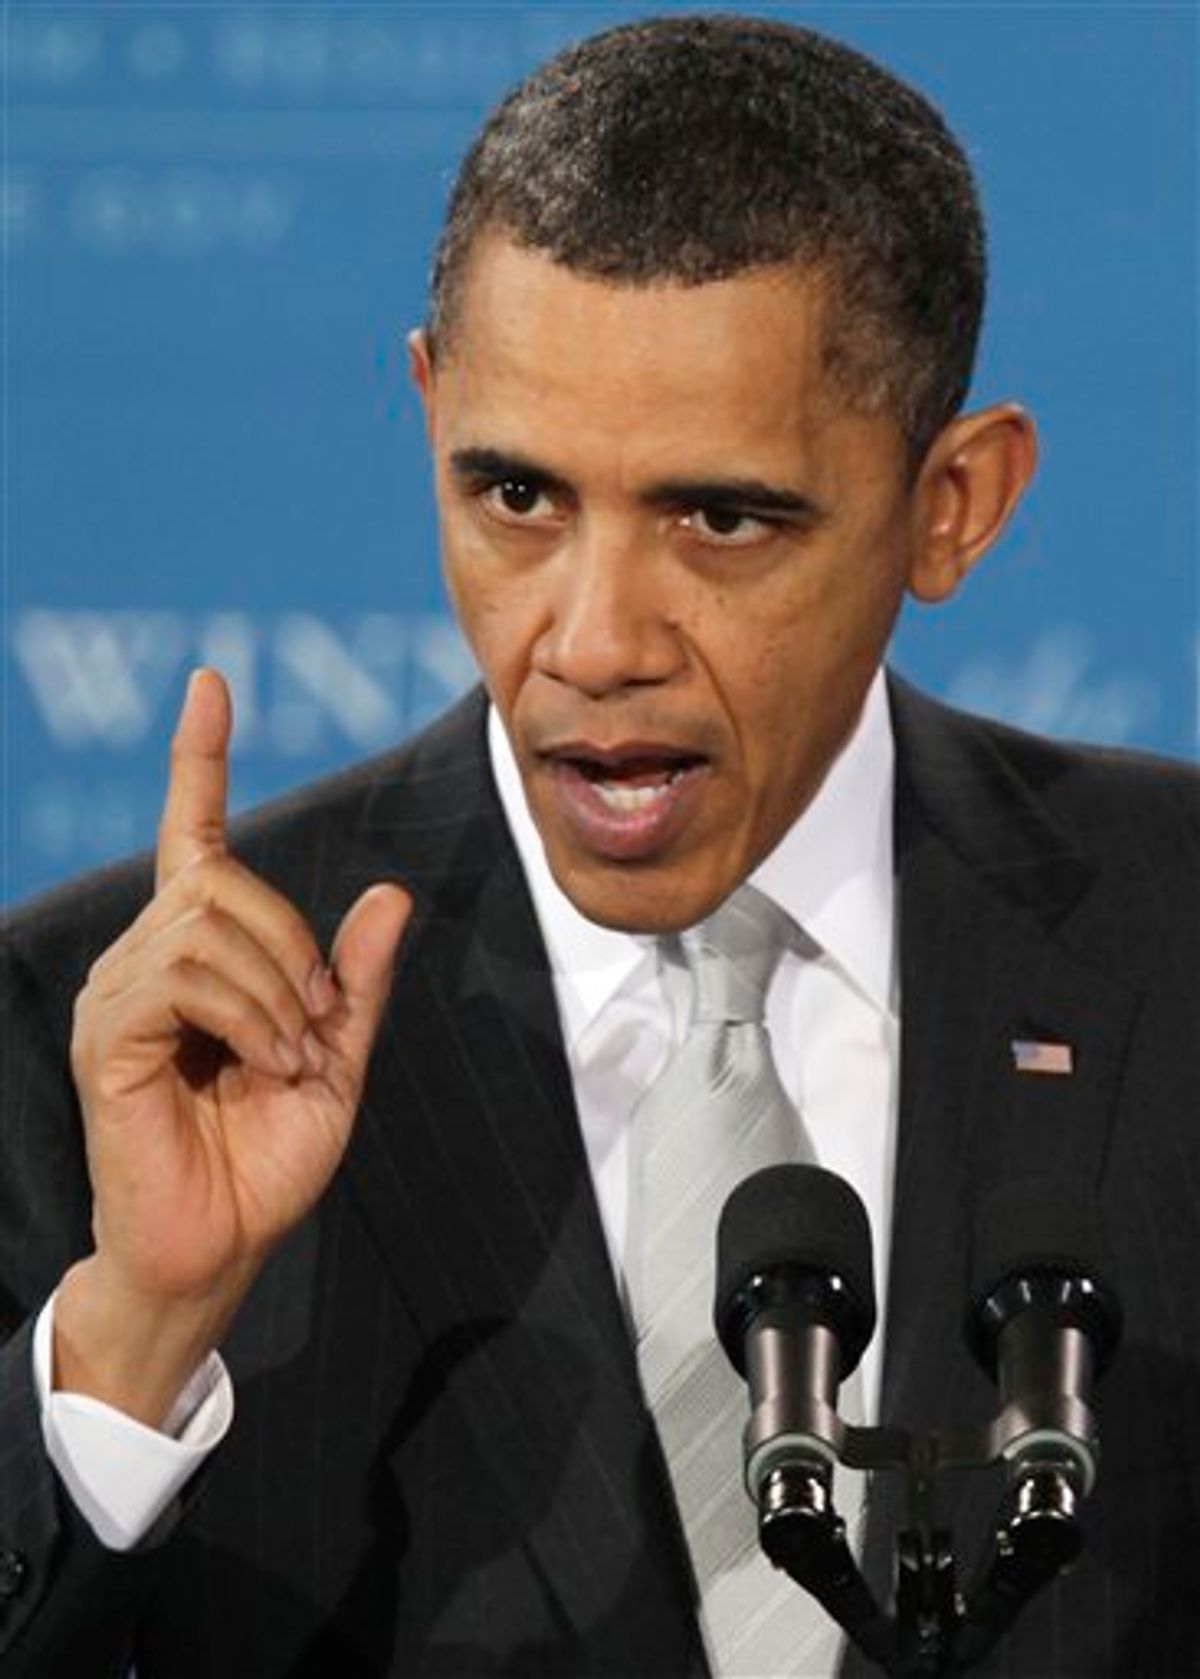 President Barack Obama speaks at Kenmore Middle School in Arlington, Va., Monday, March 14, 2011. (AP Photo) (AP)